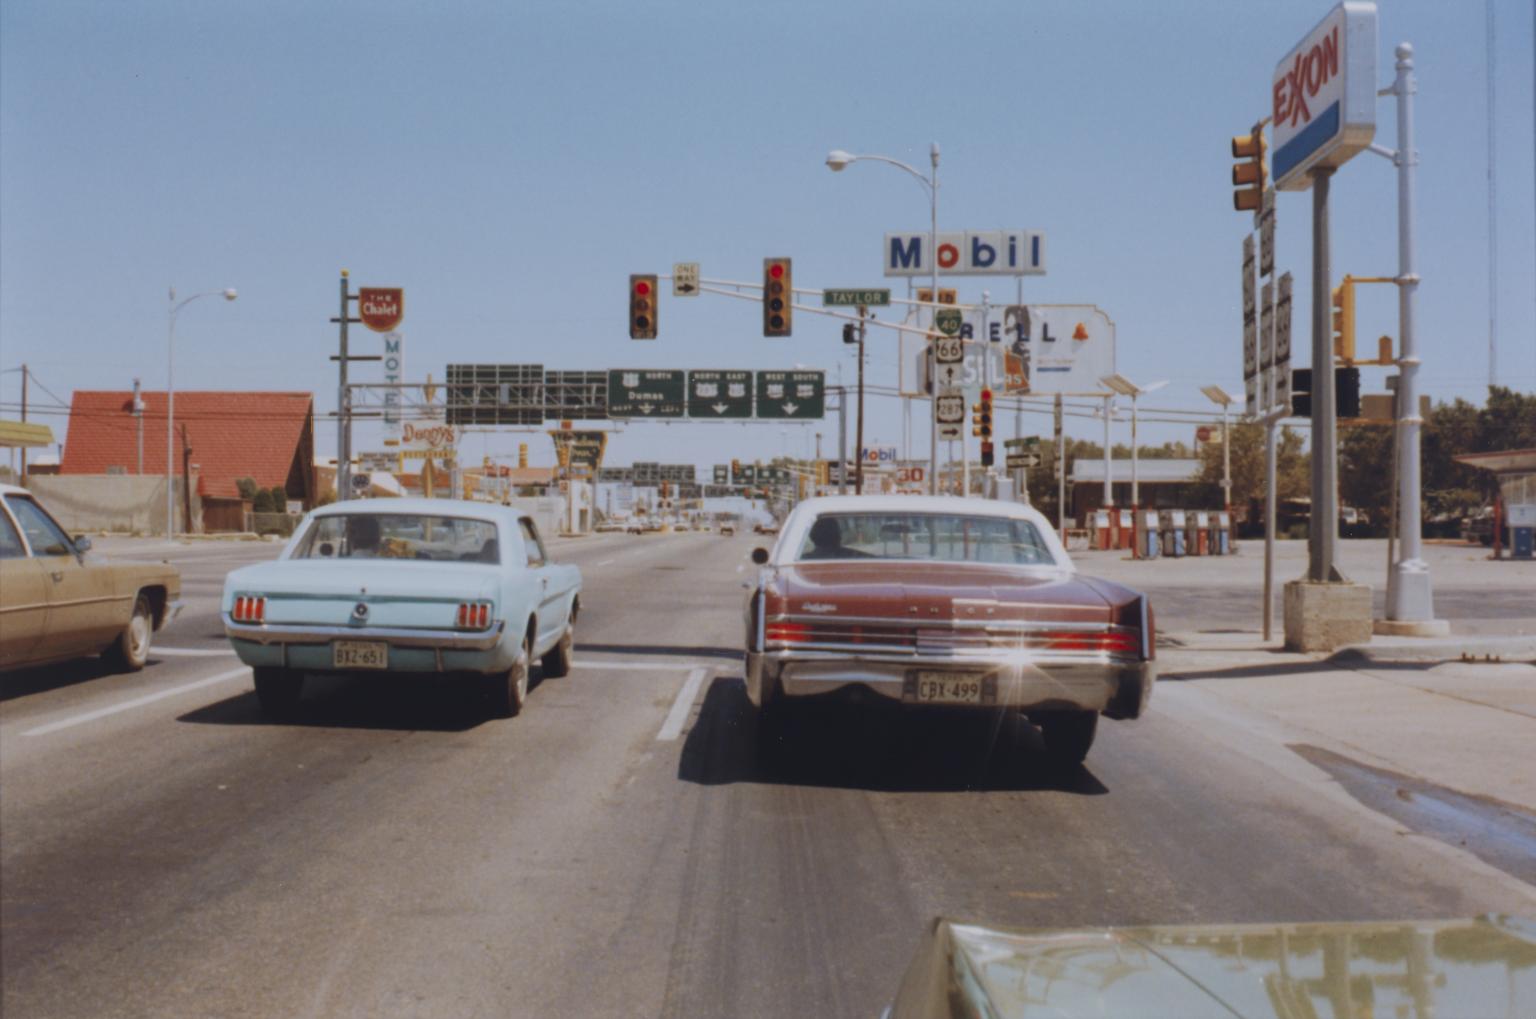 Amarillo, Texas, August 1973', Stephen Shore, 1973, printed